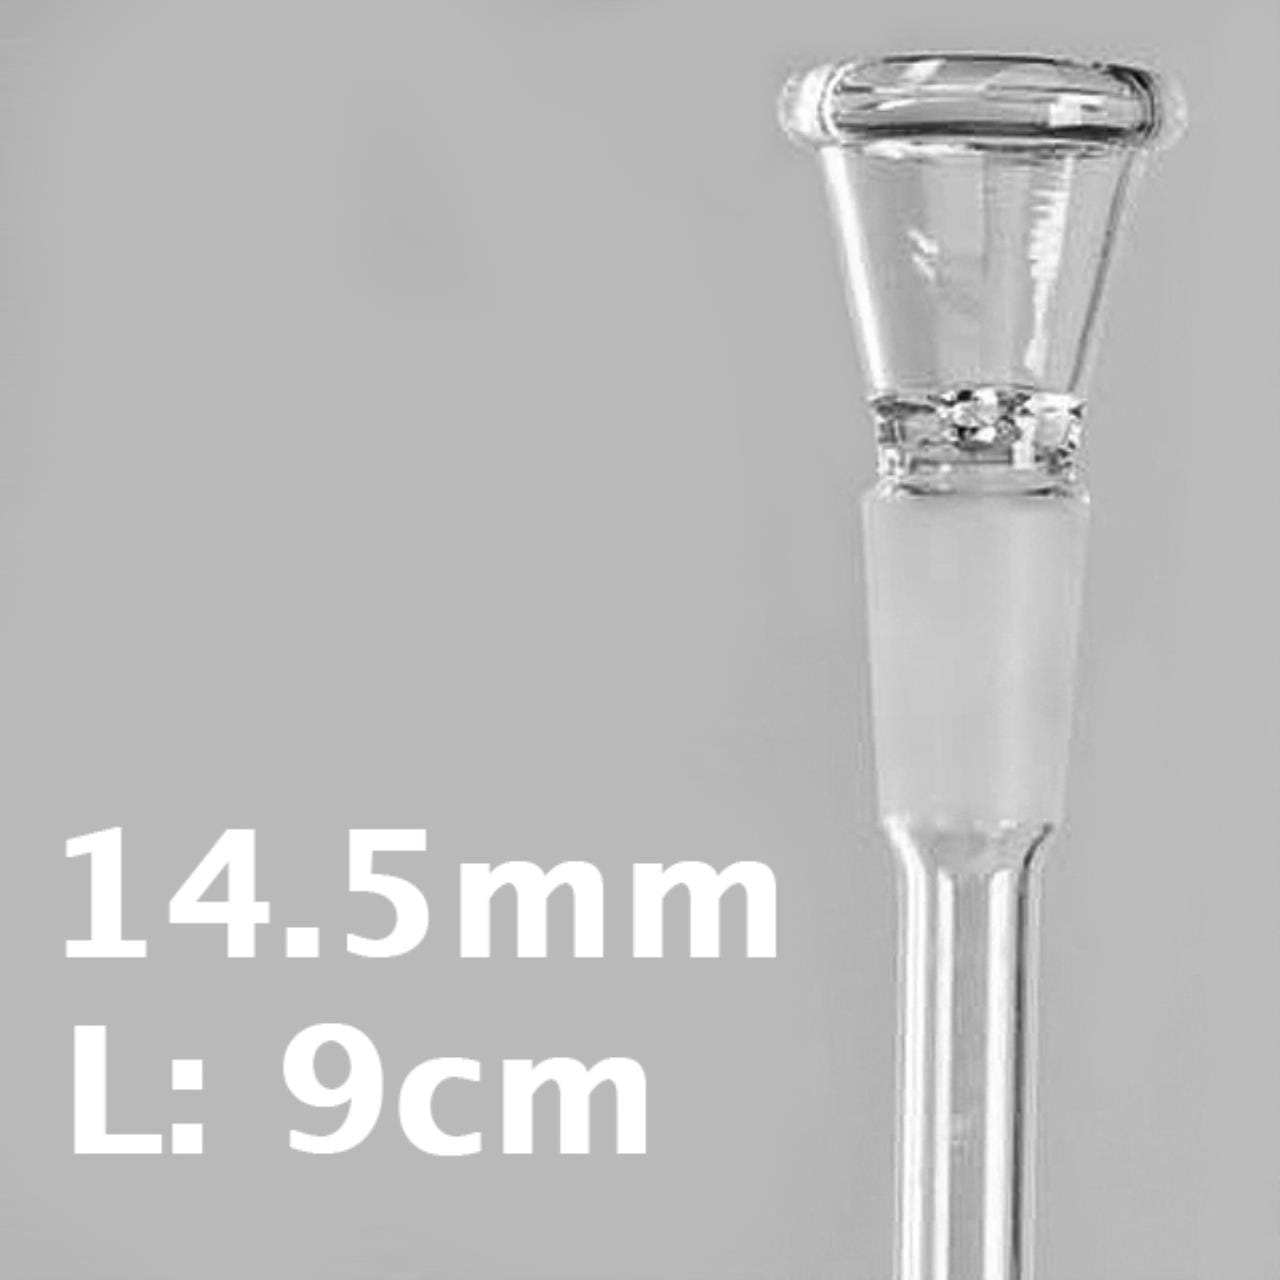 Glass Chillum – SG:14.5mm / L:9cm